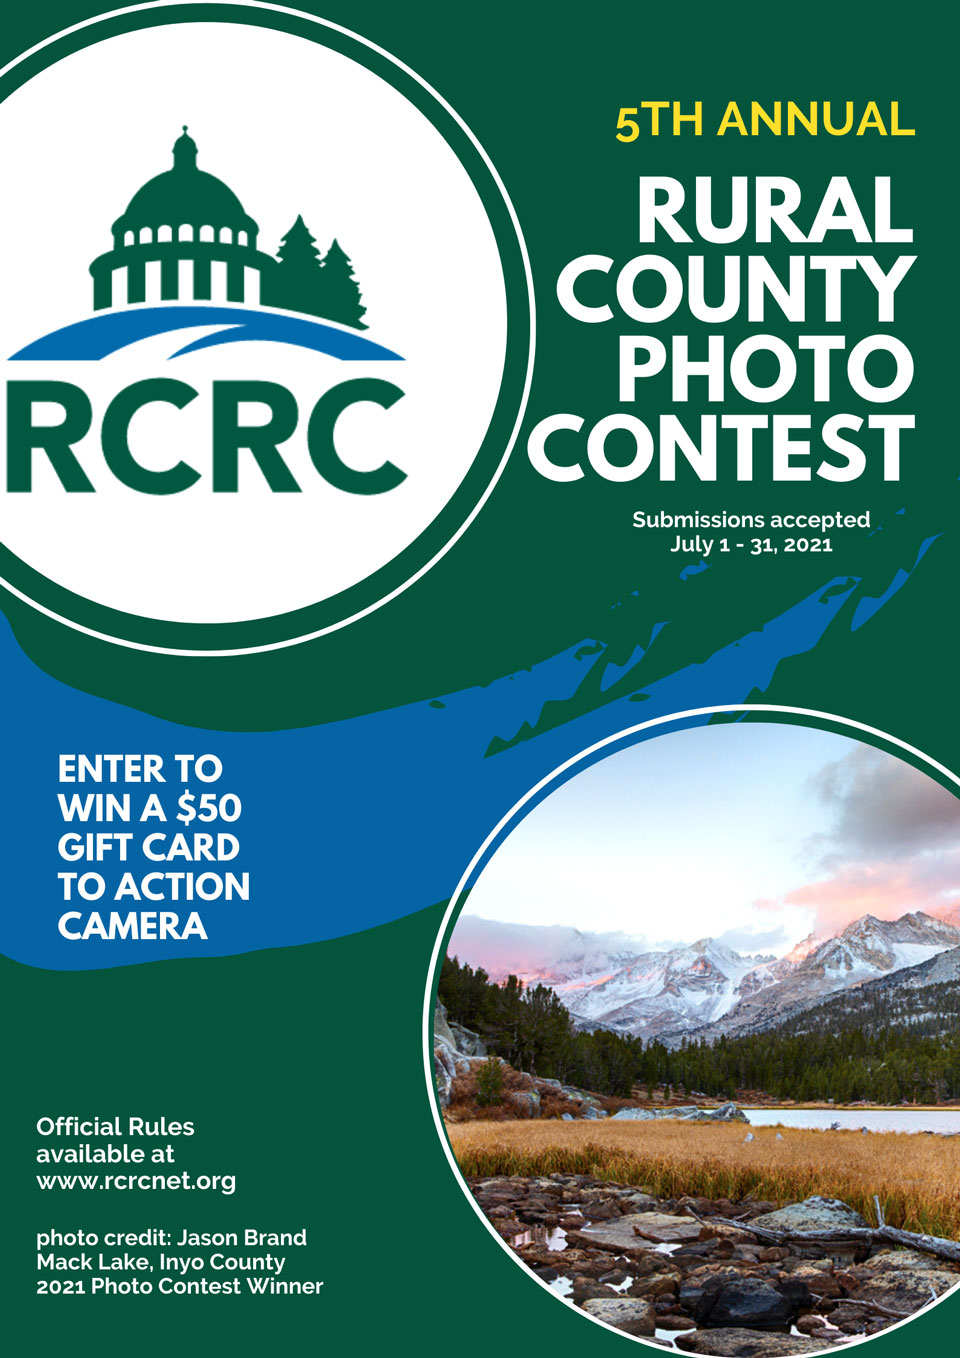 5th Annual Rural County Photo Contest